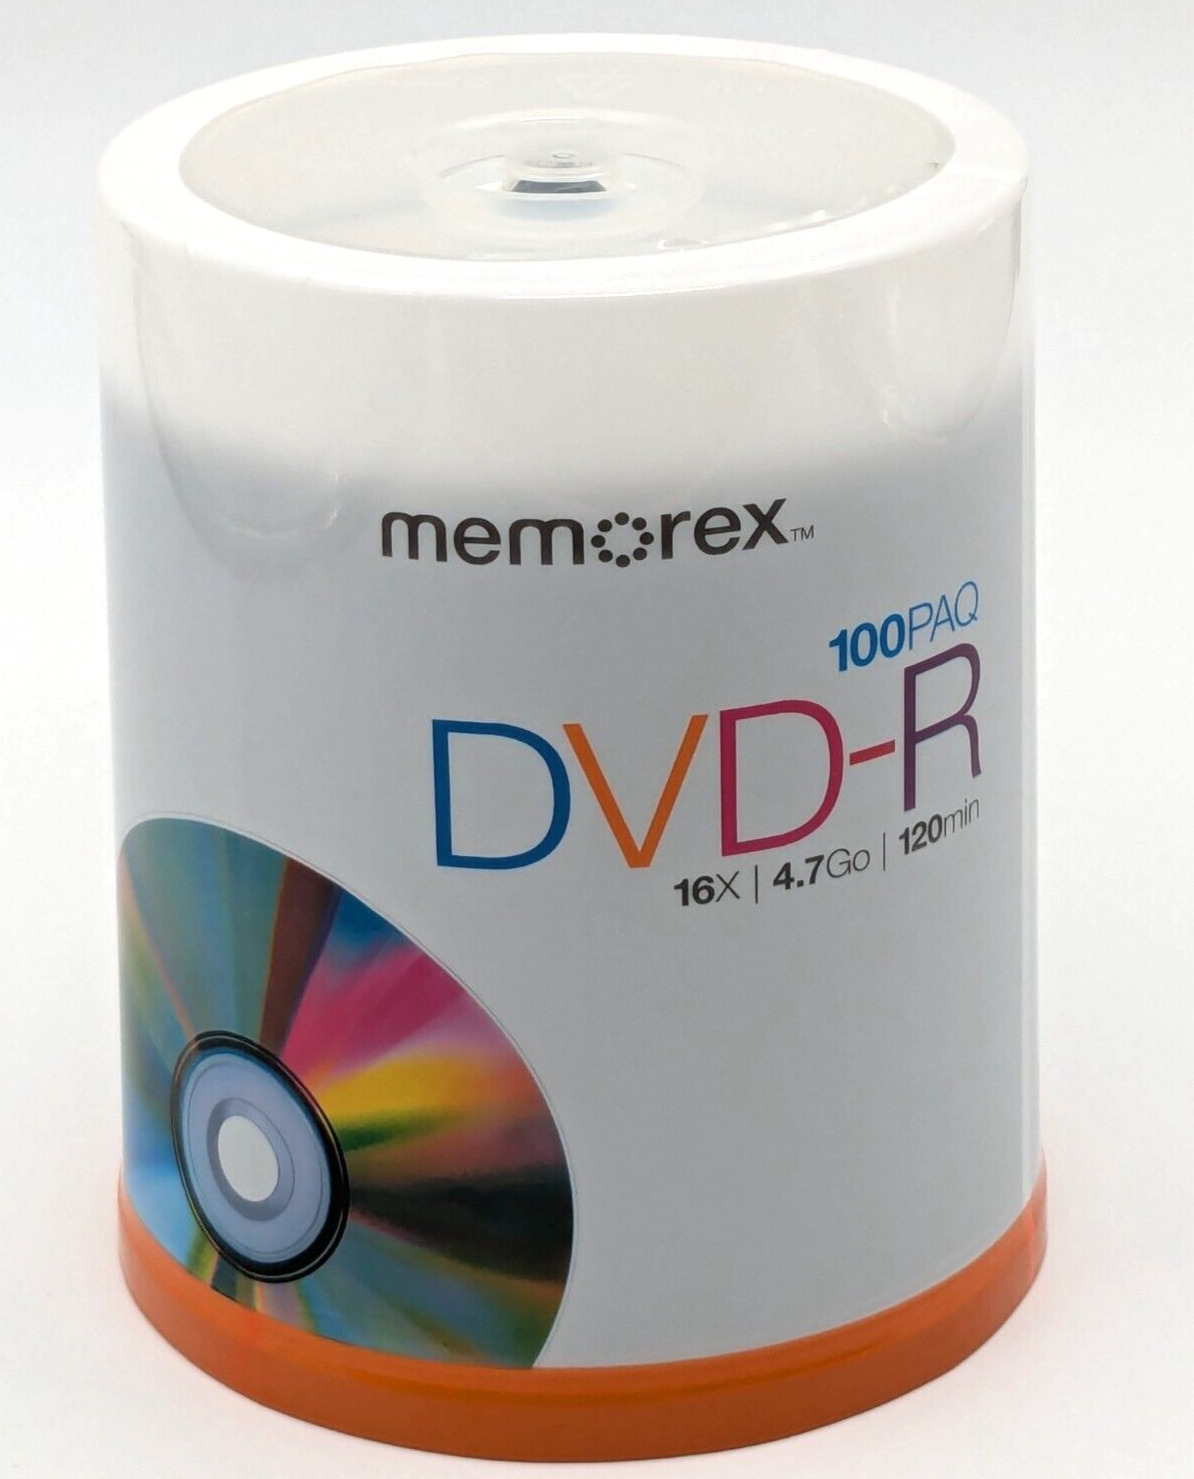 Memorex DVD+R - 16X - 4.7 GB -120 min - 100 Pack Spindle - Brand New Sealed